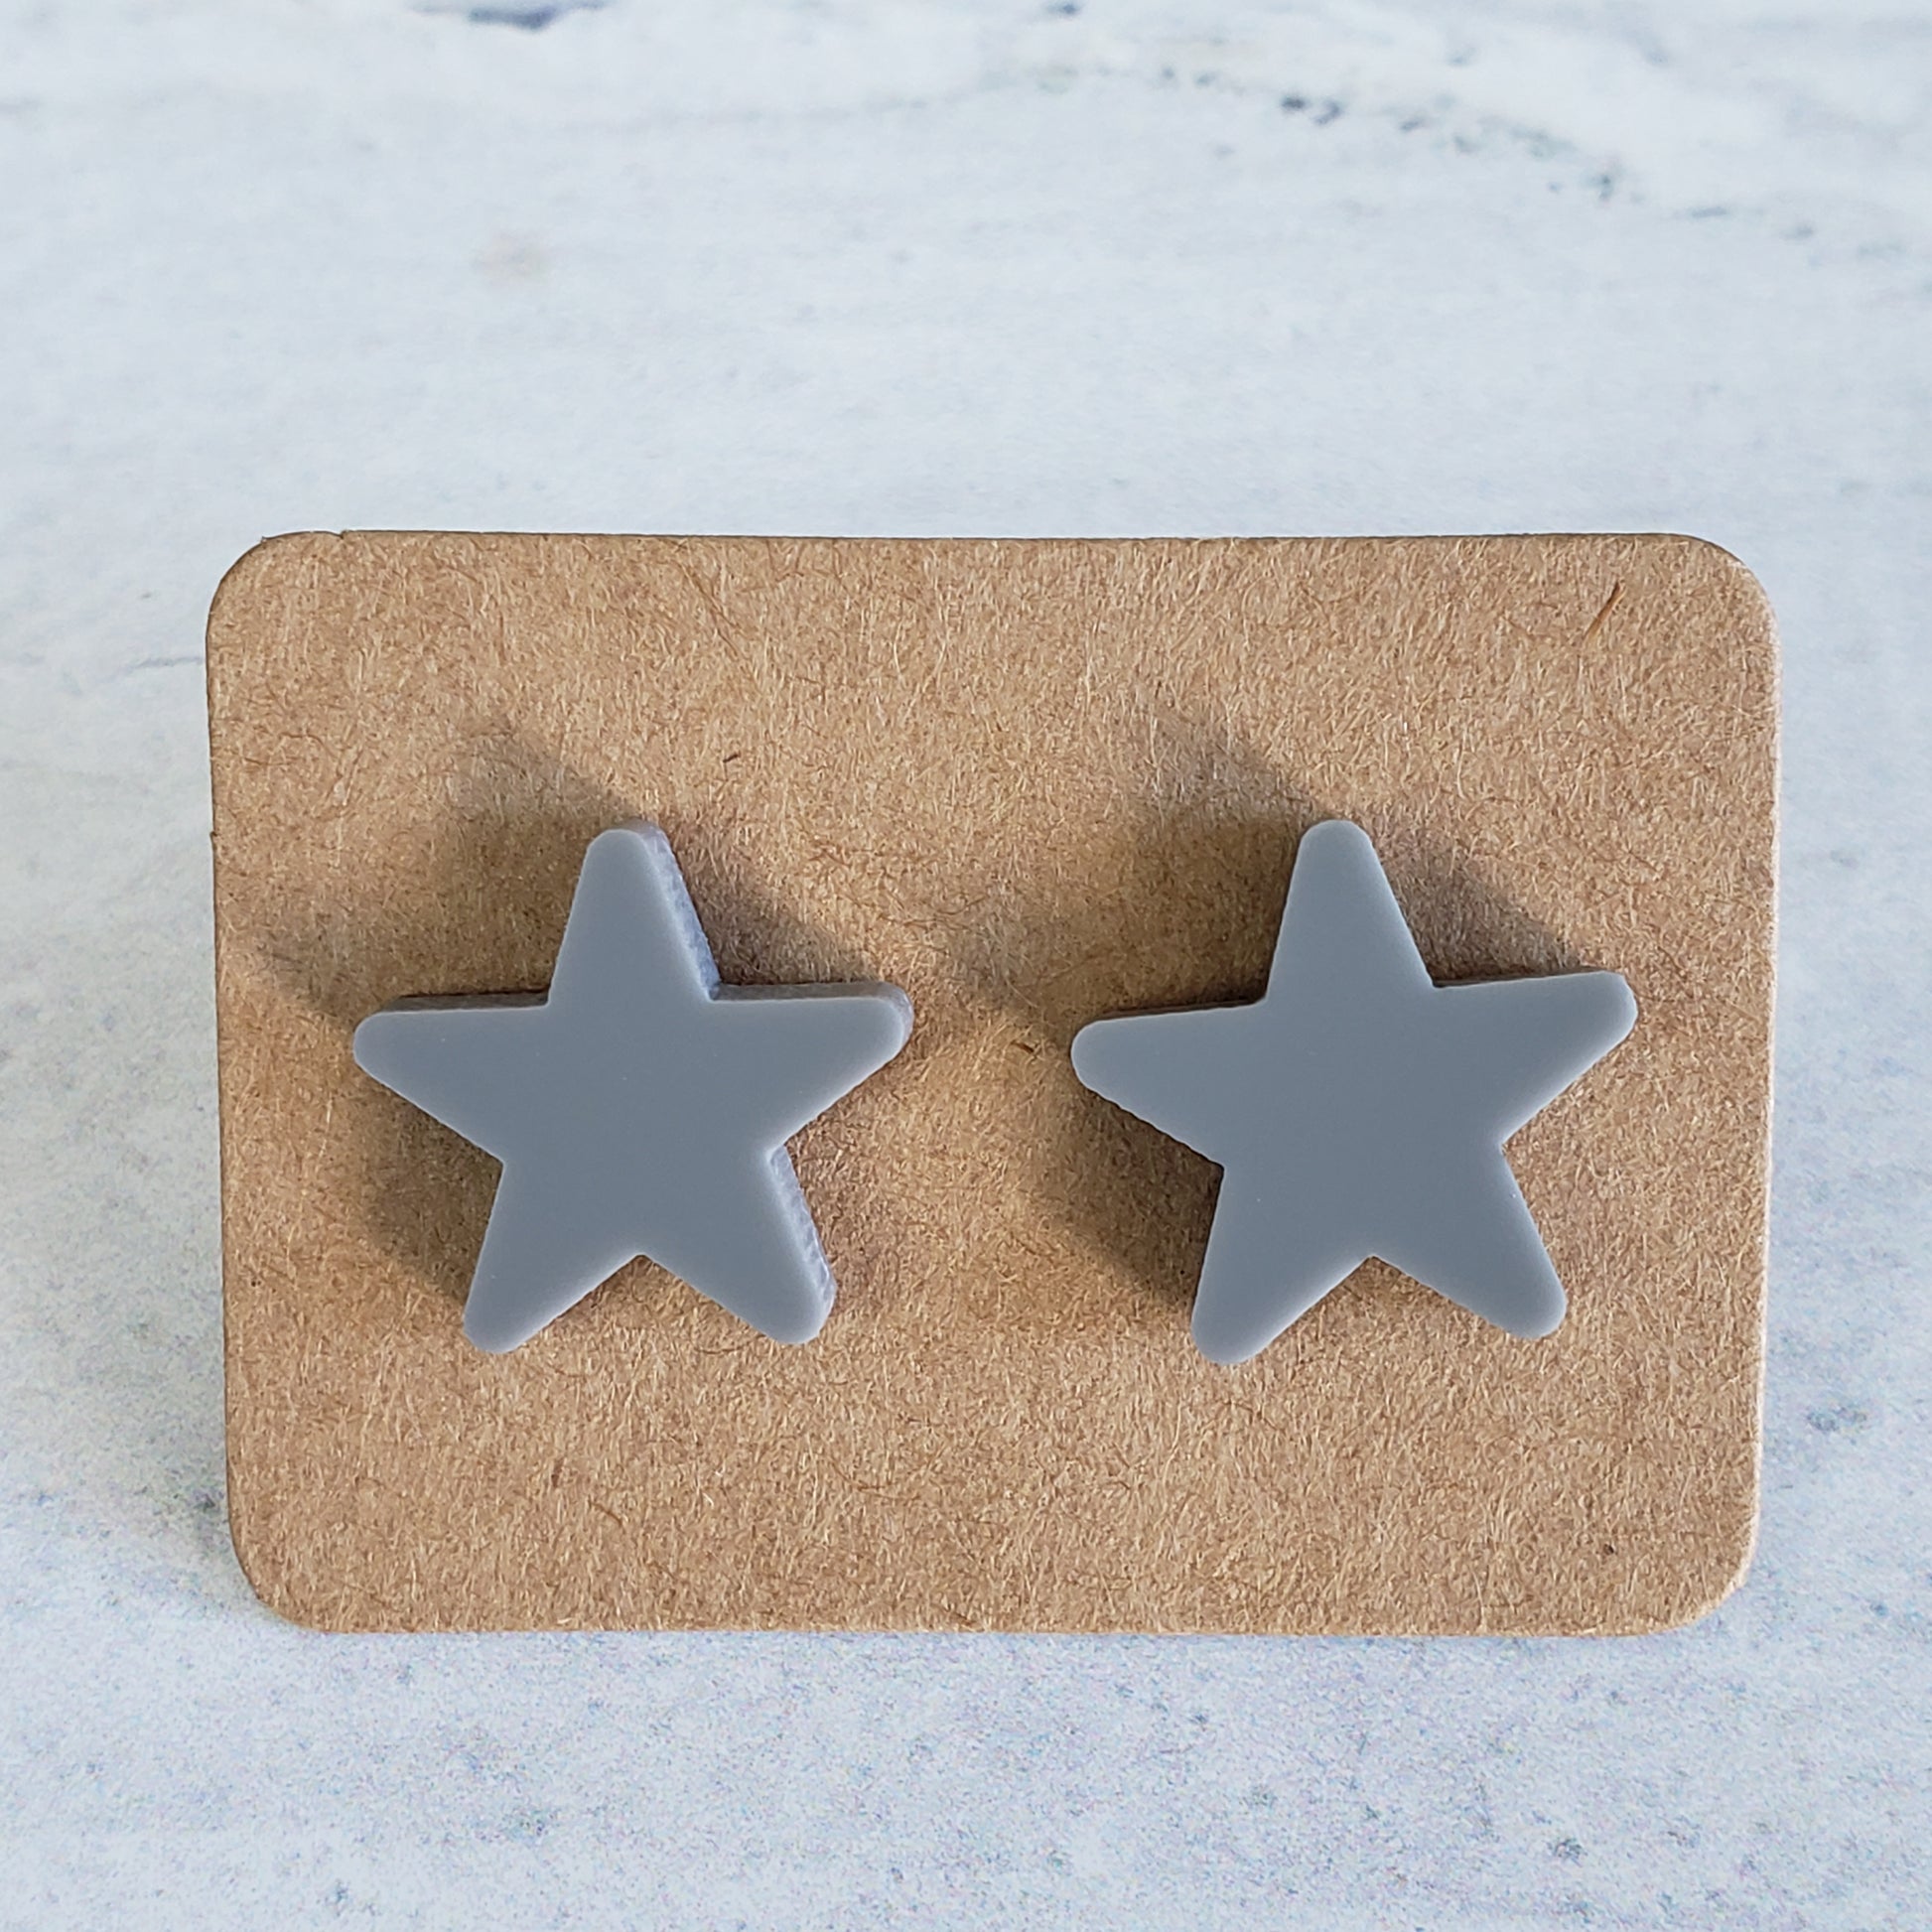 Gray star stud earrings on earring cards